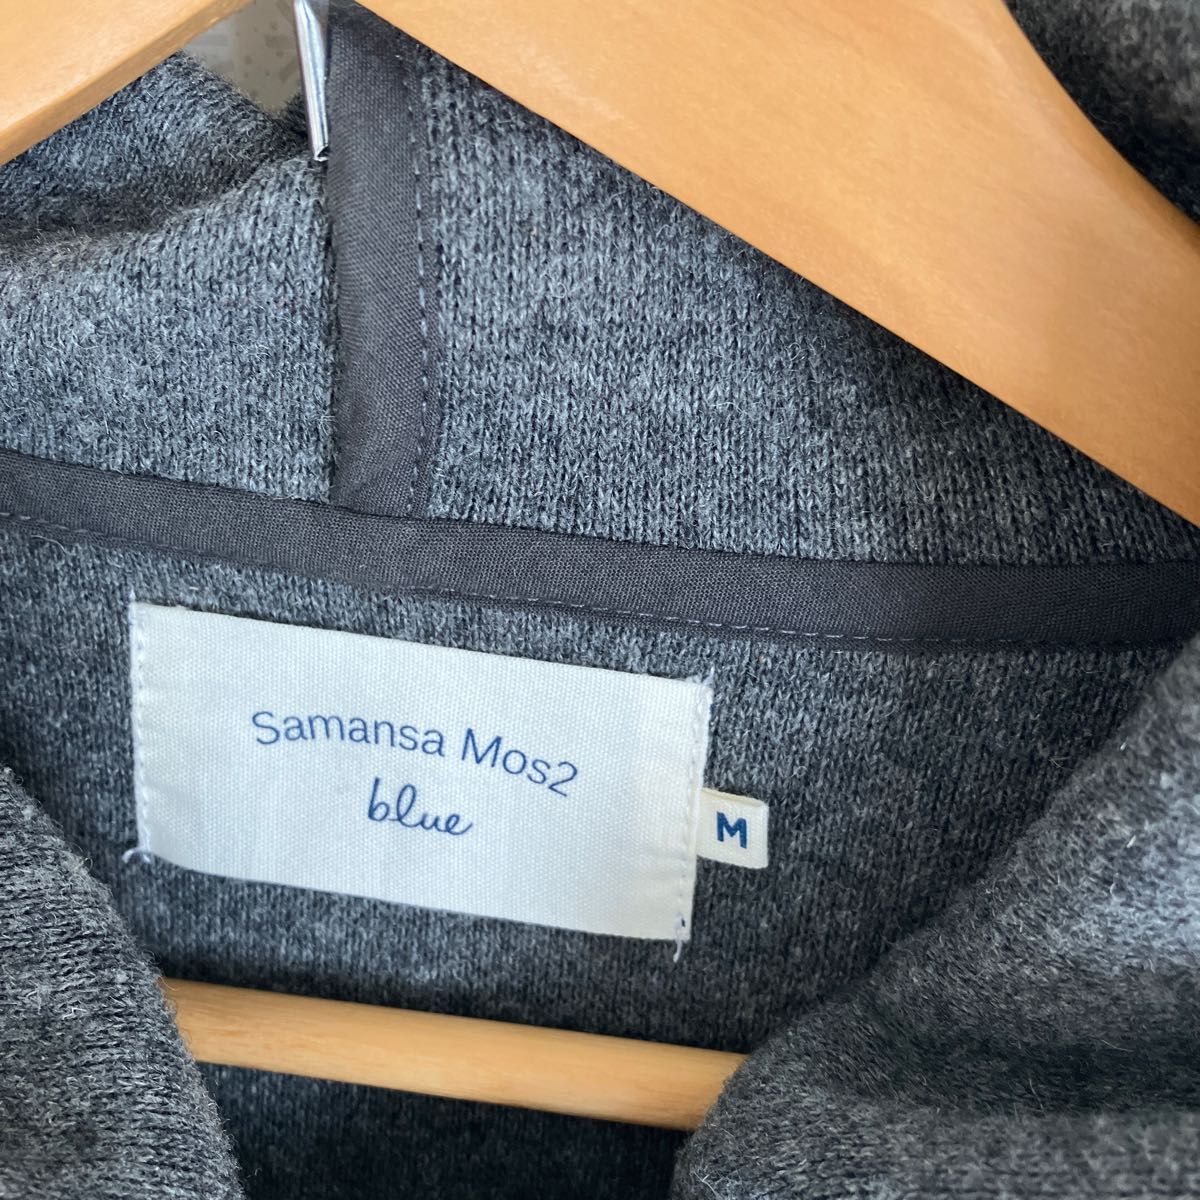 Samansa Mos2 blueコート フード付き サマンサモスモス M